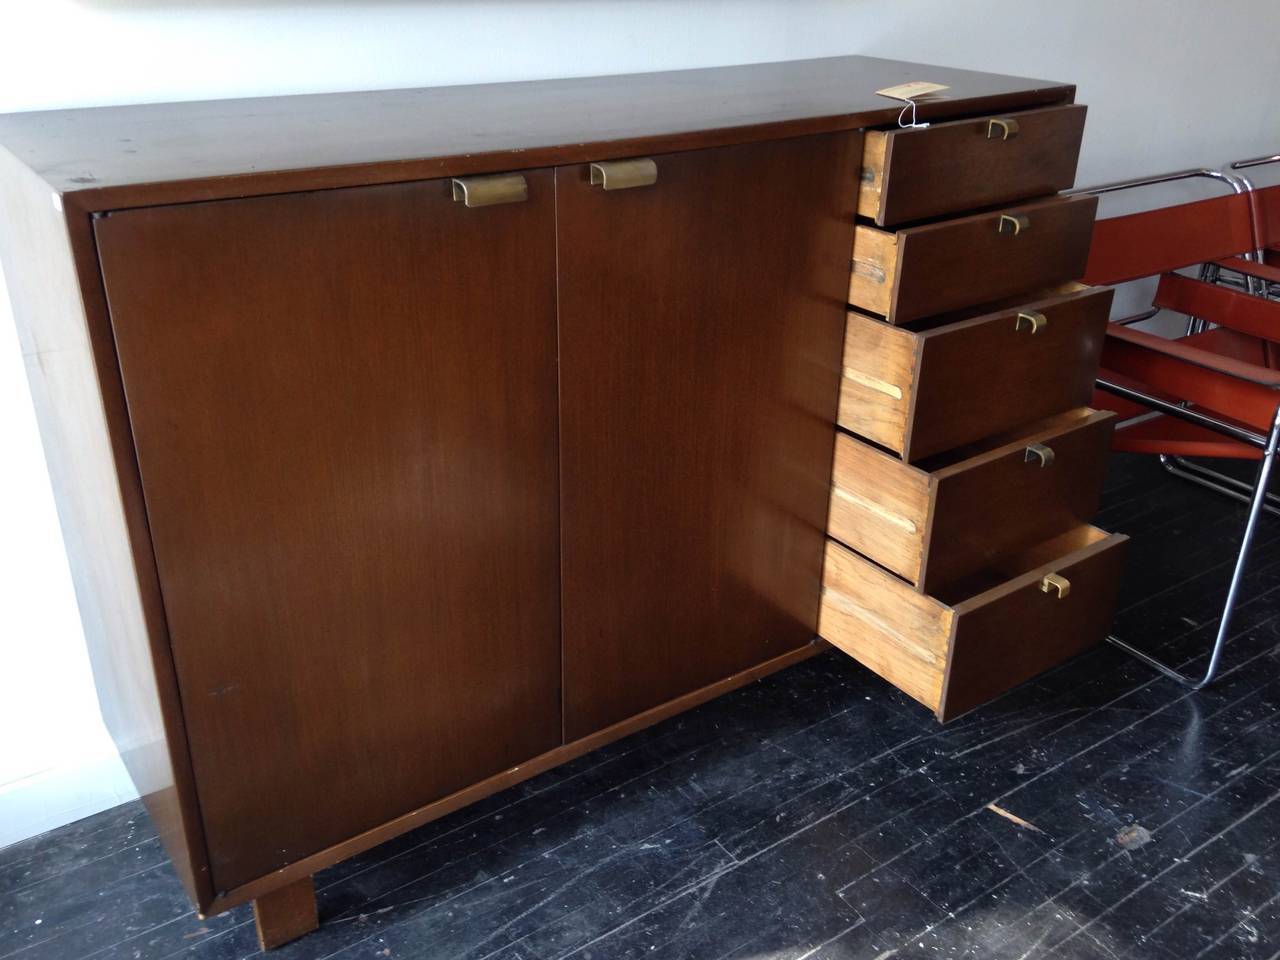 2 door walnut cabinet dresser with 2 shelfs designed by George Nelson for Herman Miller in 1948